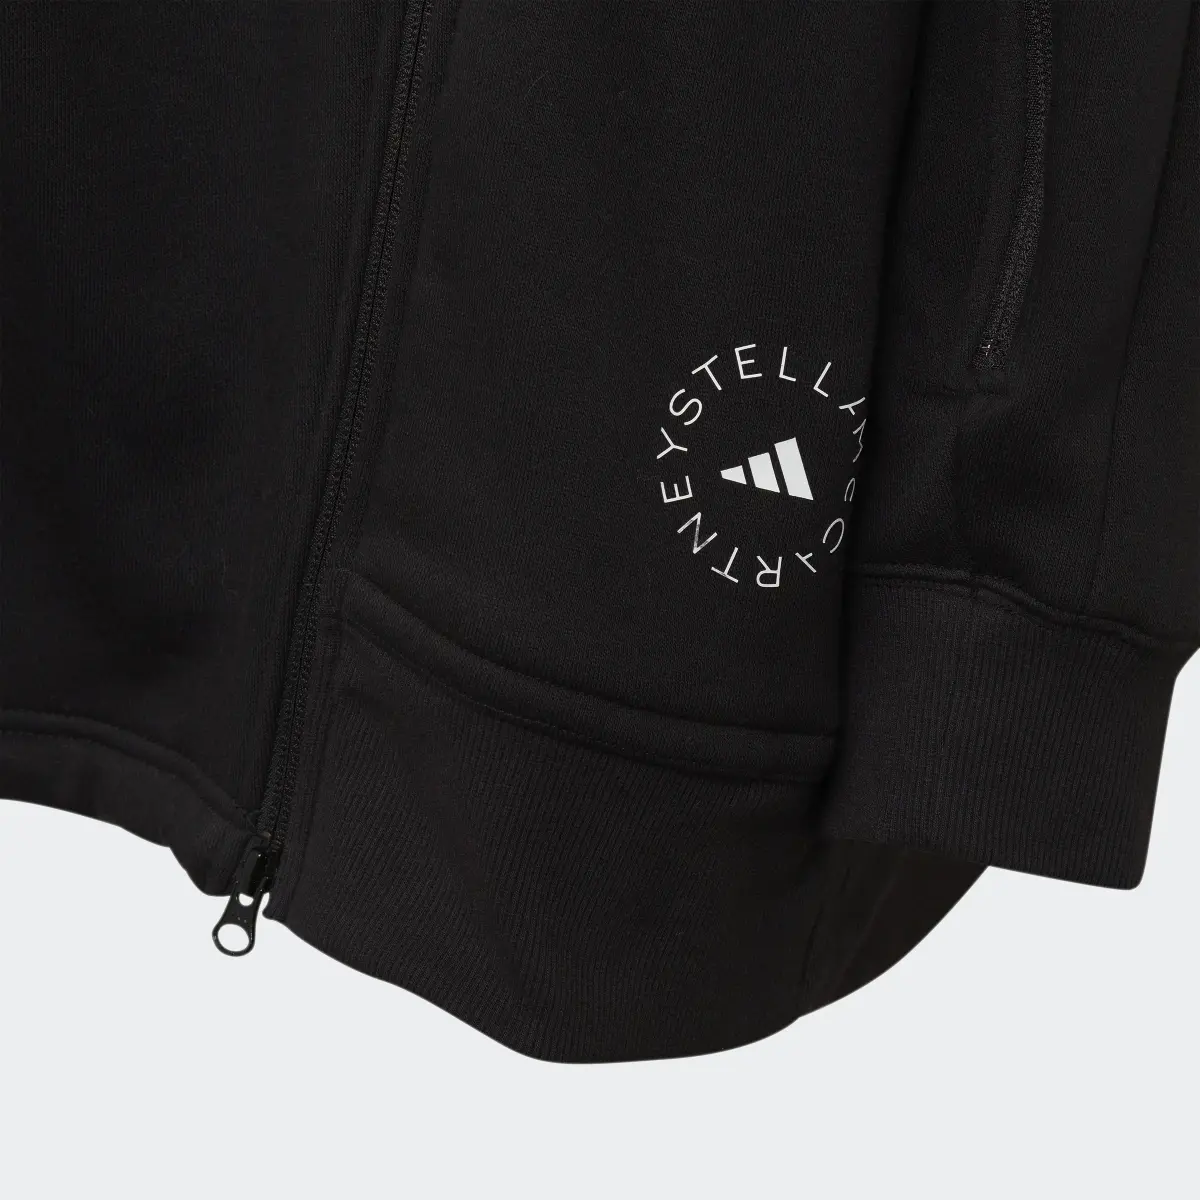 Adidas by Stella McCartney TrueStrength Maternity 3-in-1 Jacket. 2